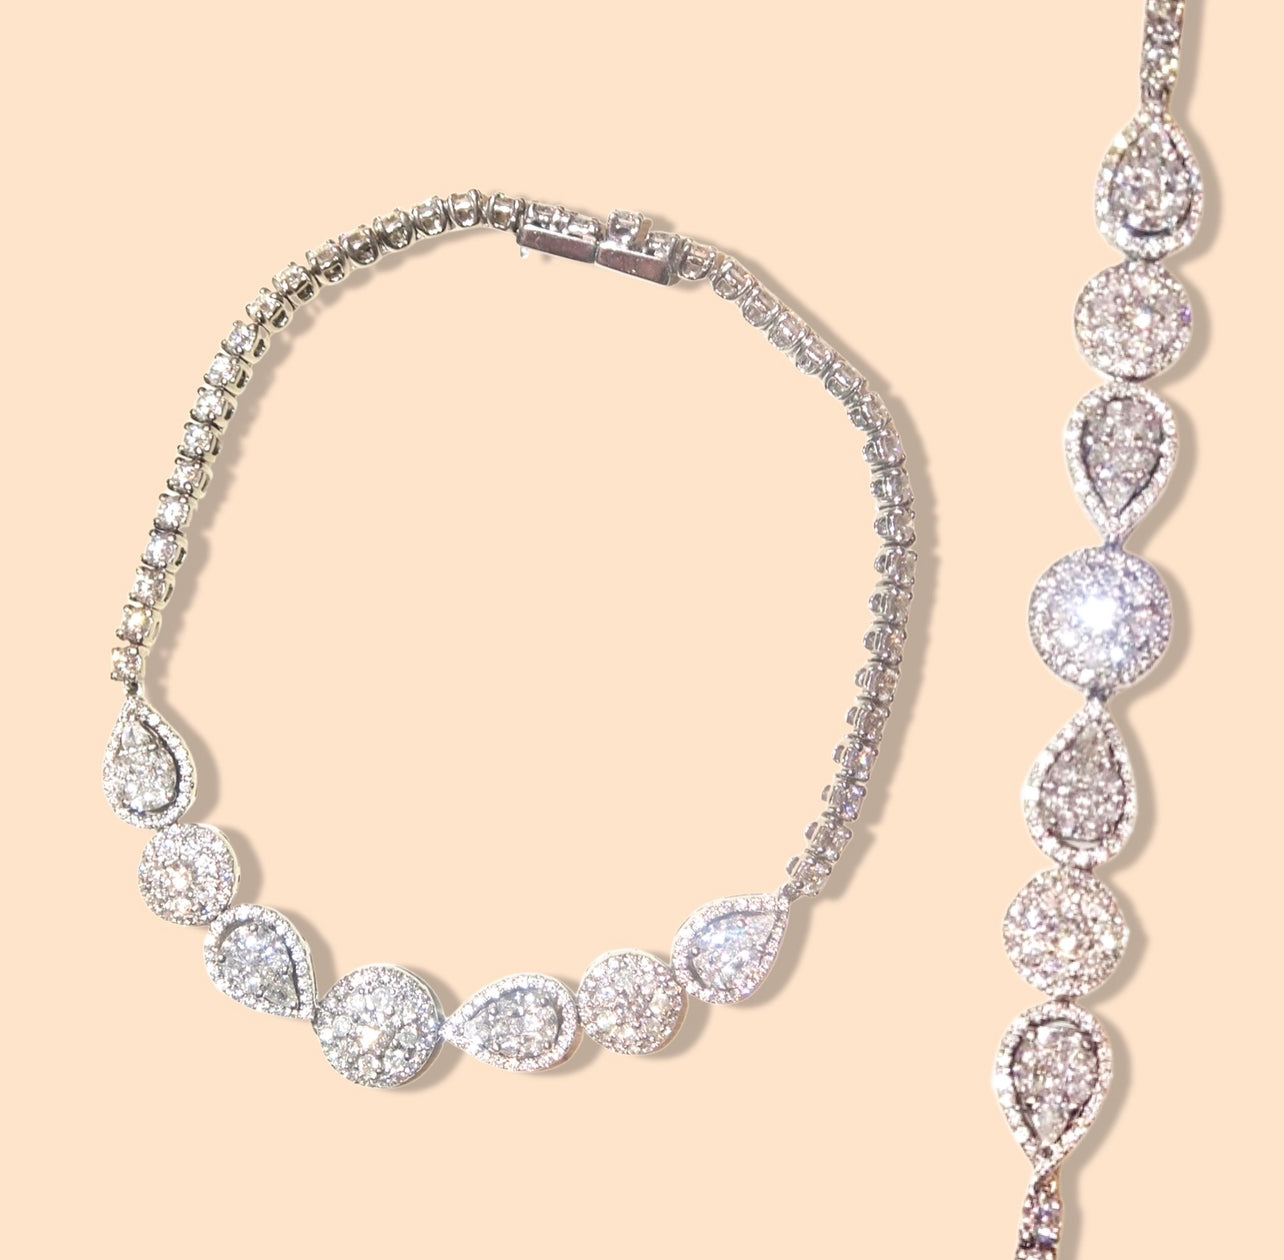 Queen B Tennis Diamond Bracelet